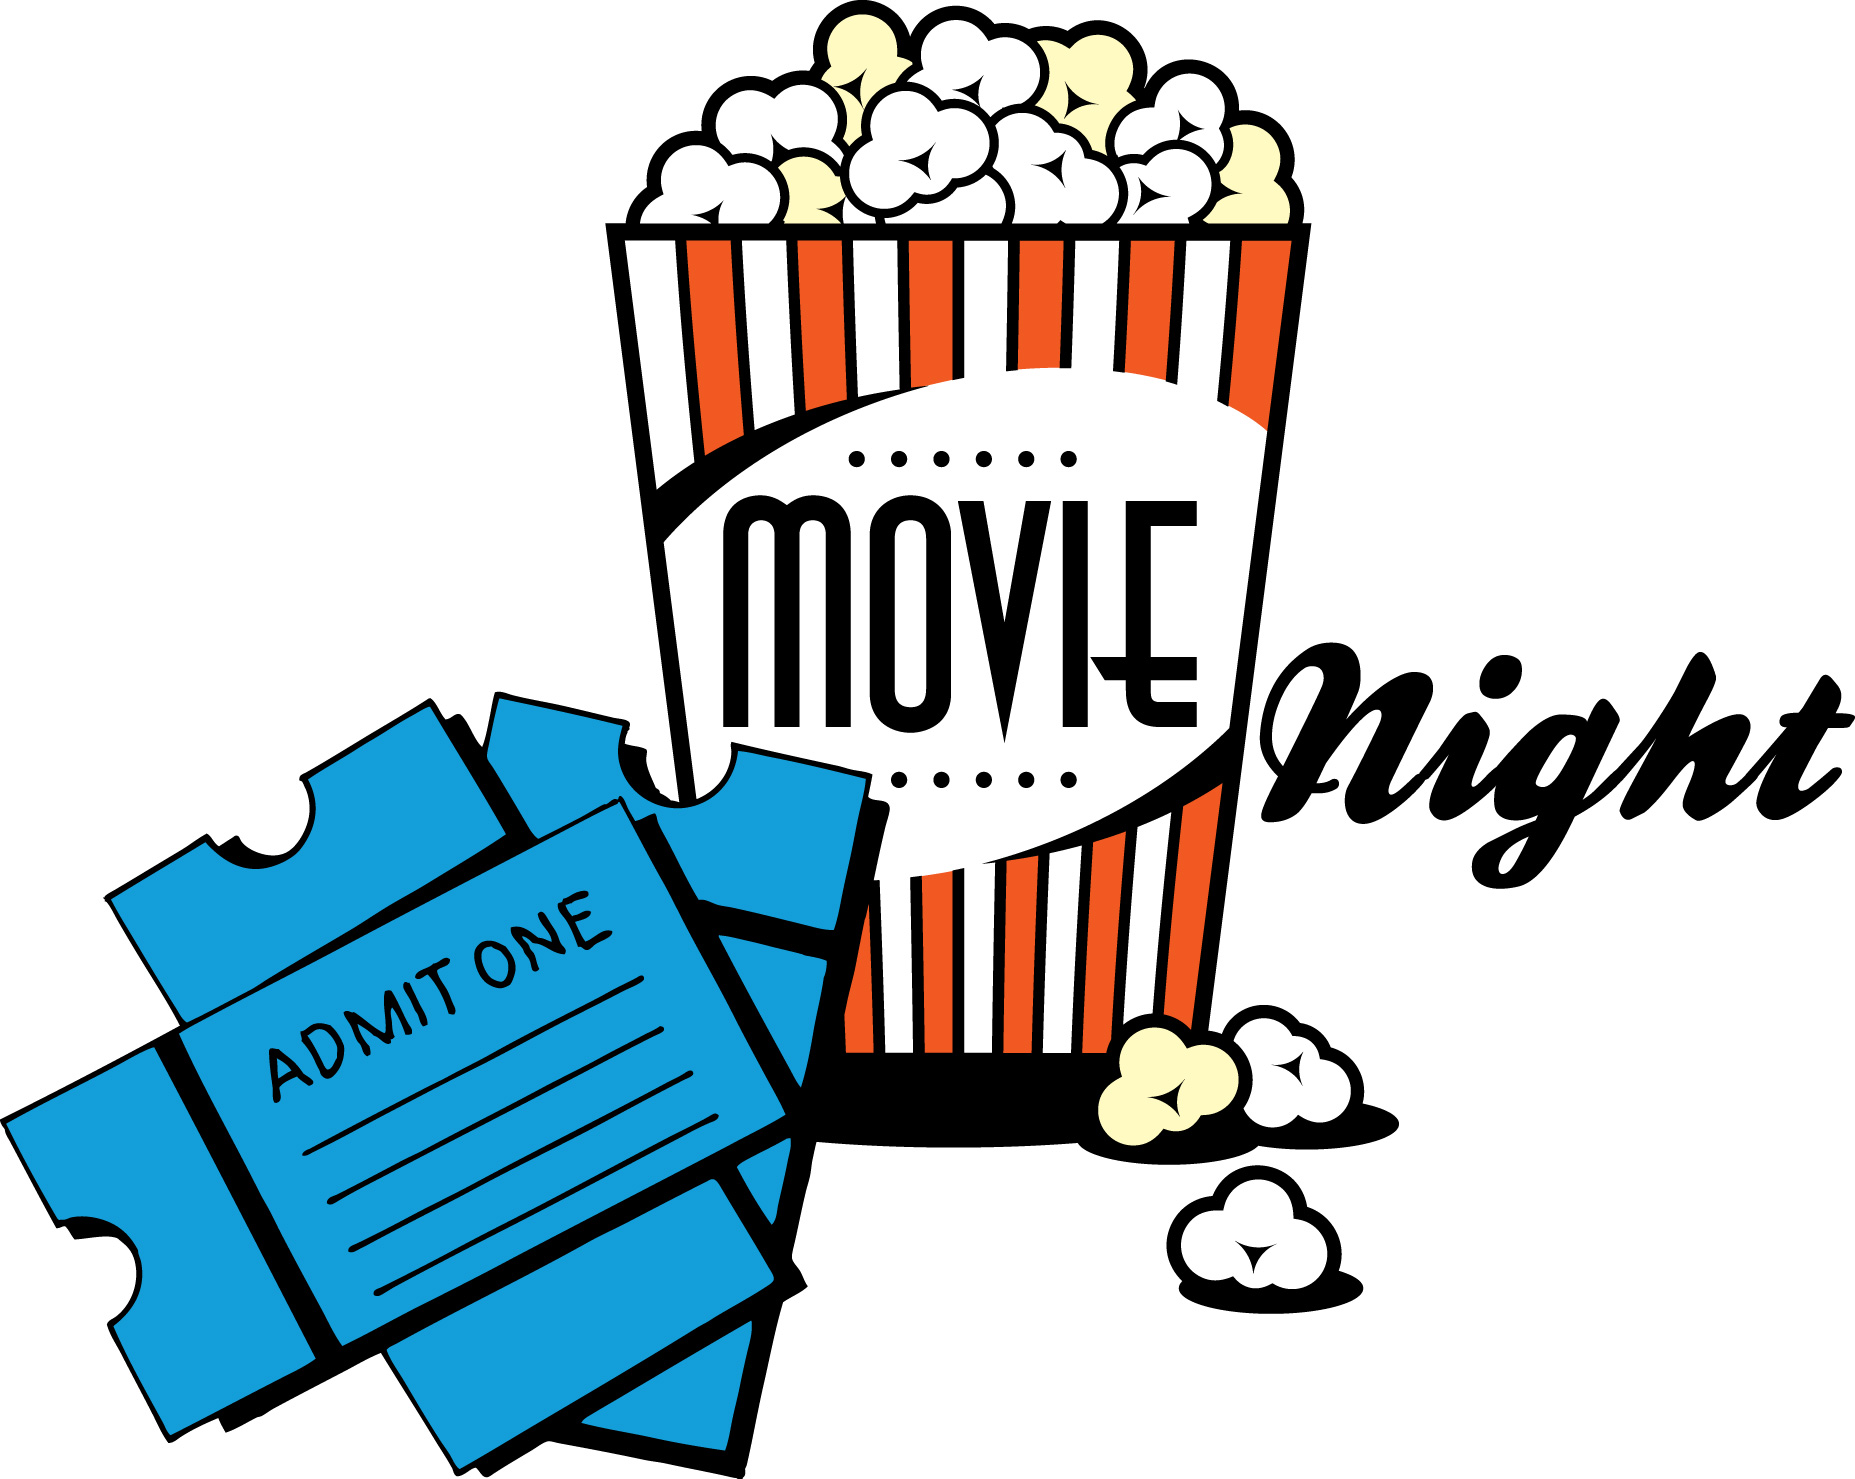 Movie Night drawing free image download